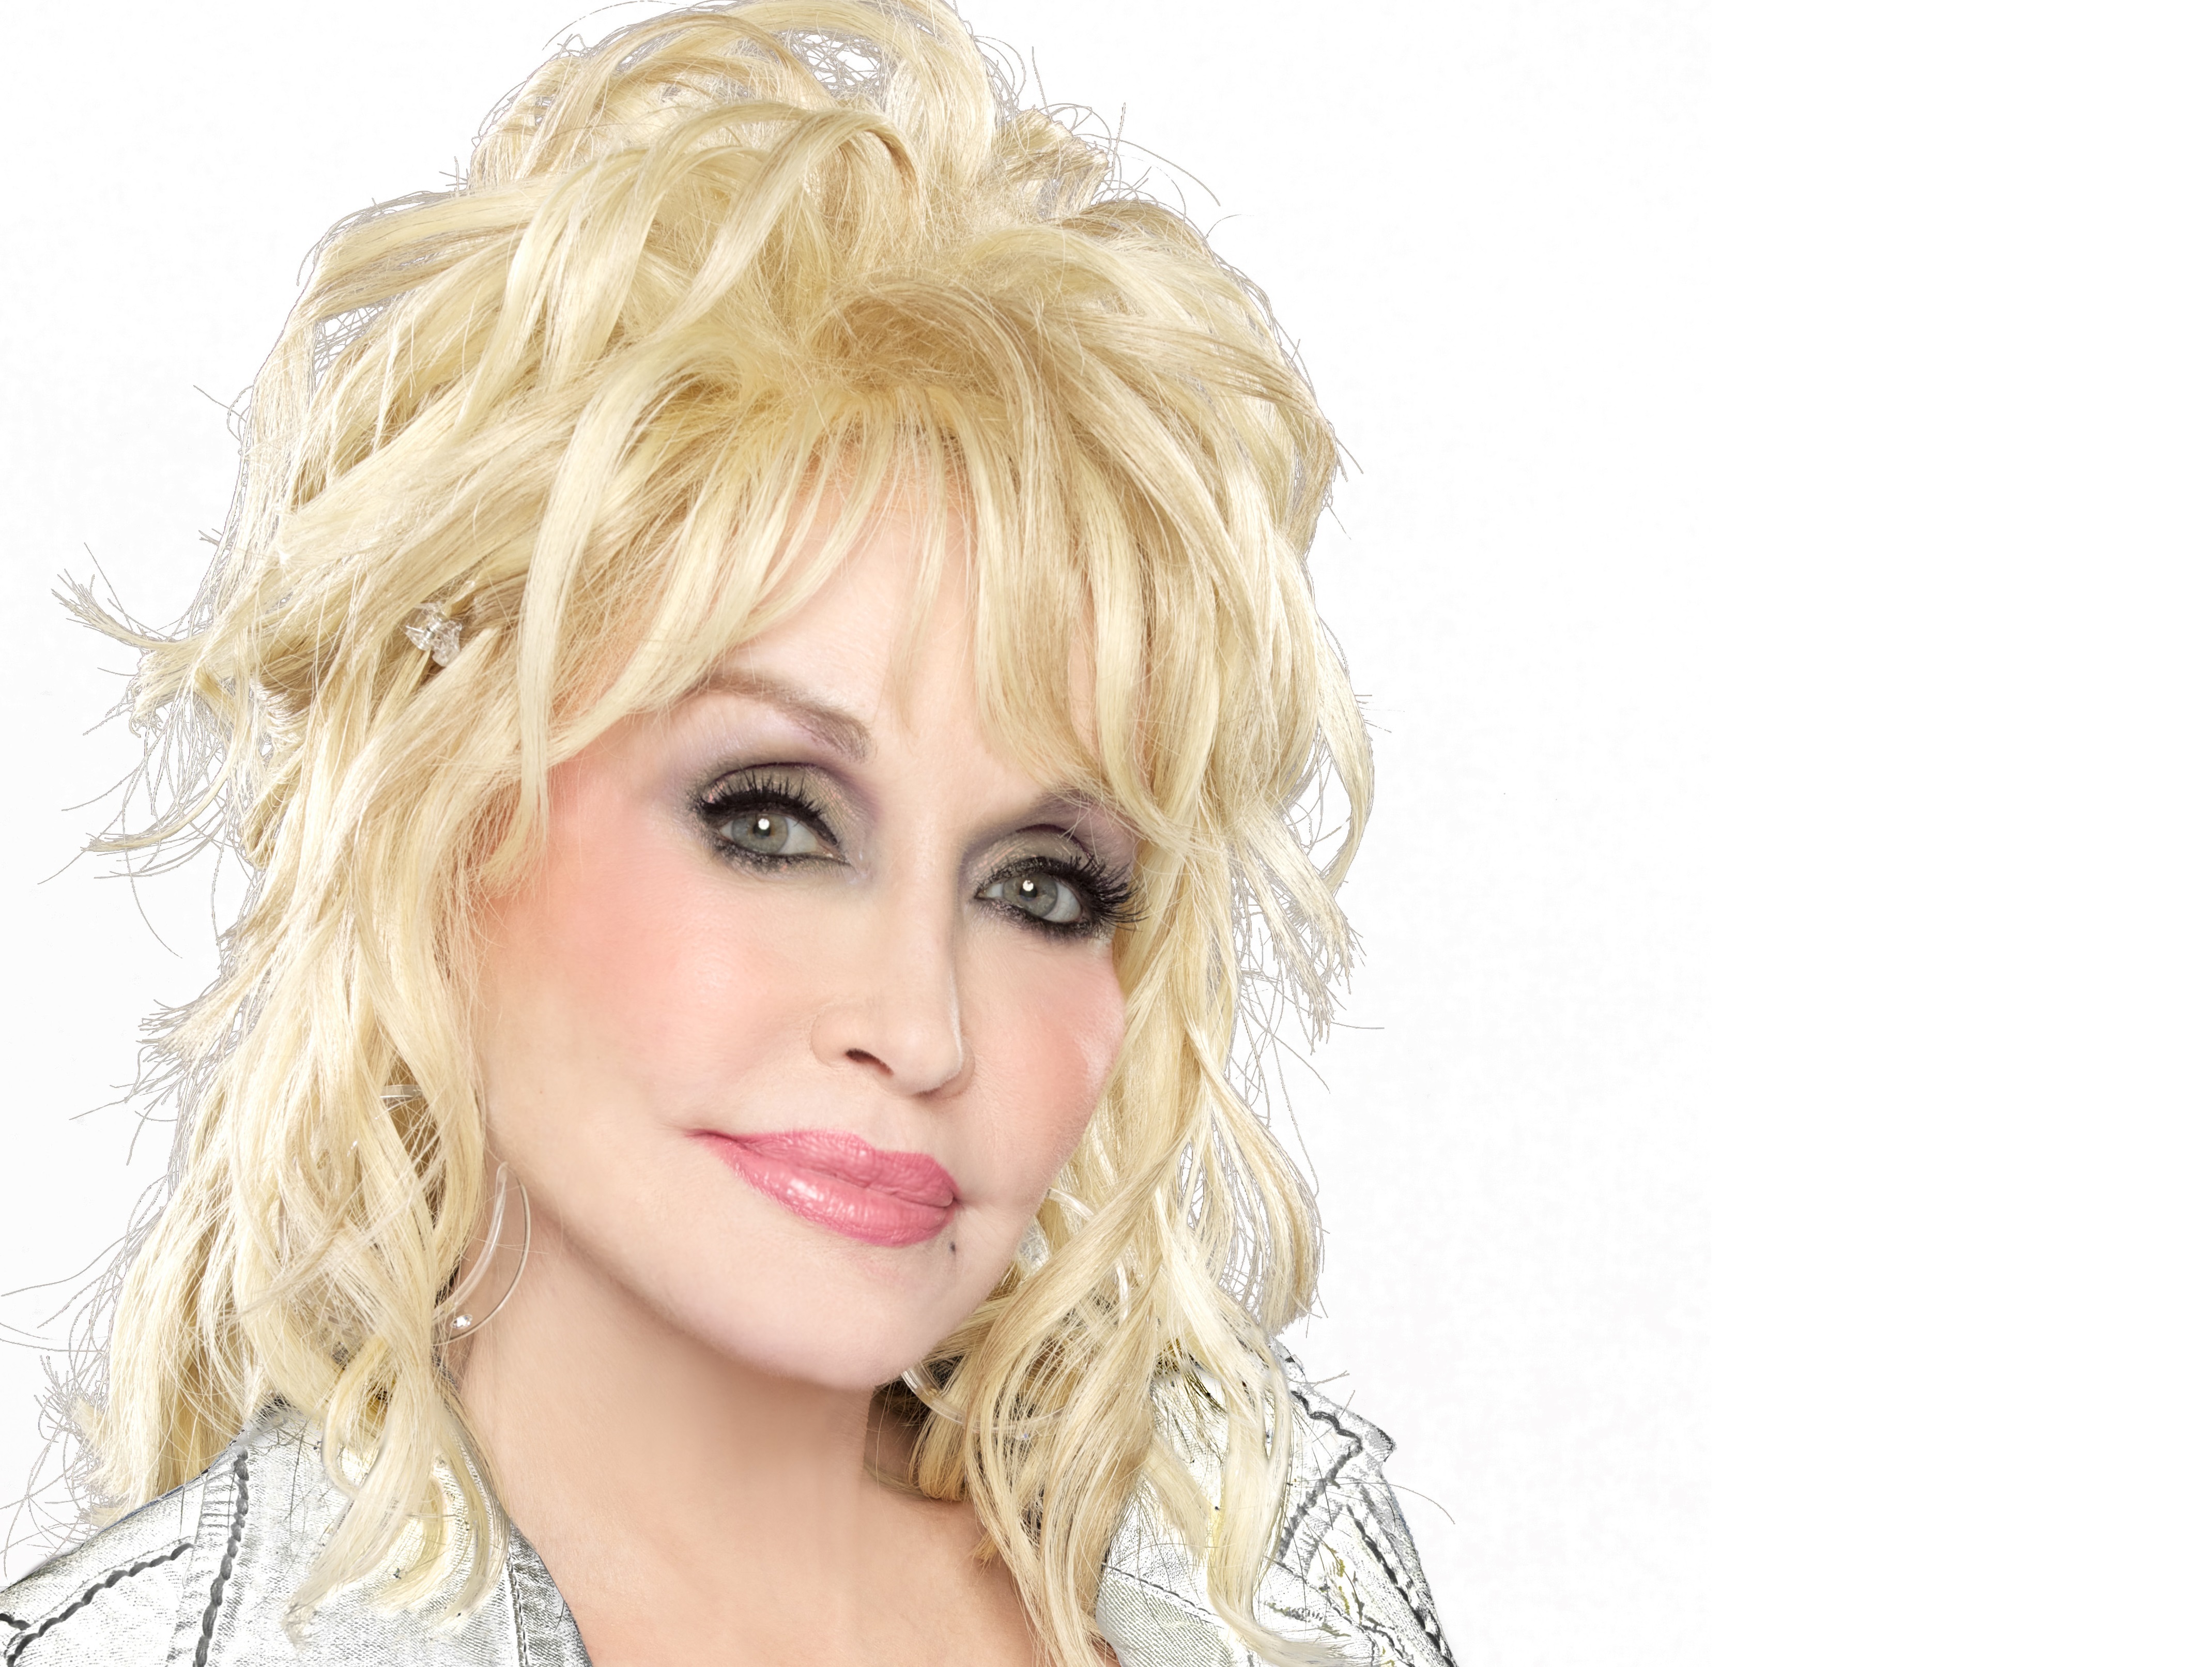 74+] Dolly Parton Wallpaper - WallpaperSafari